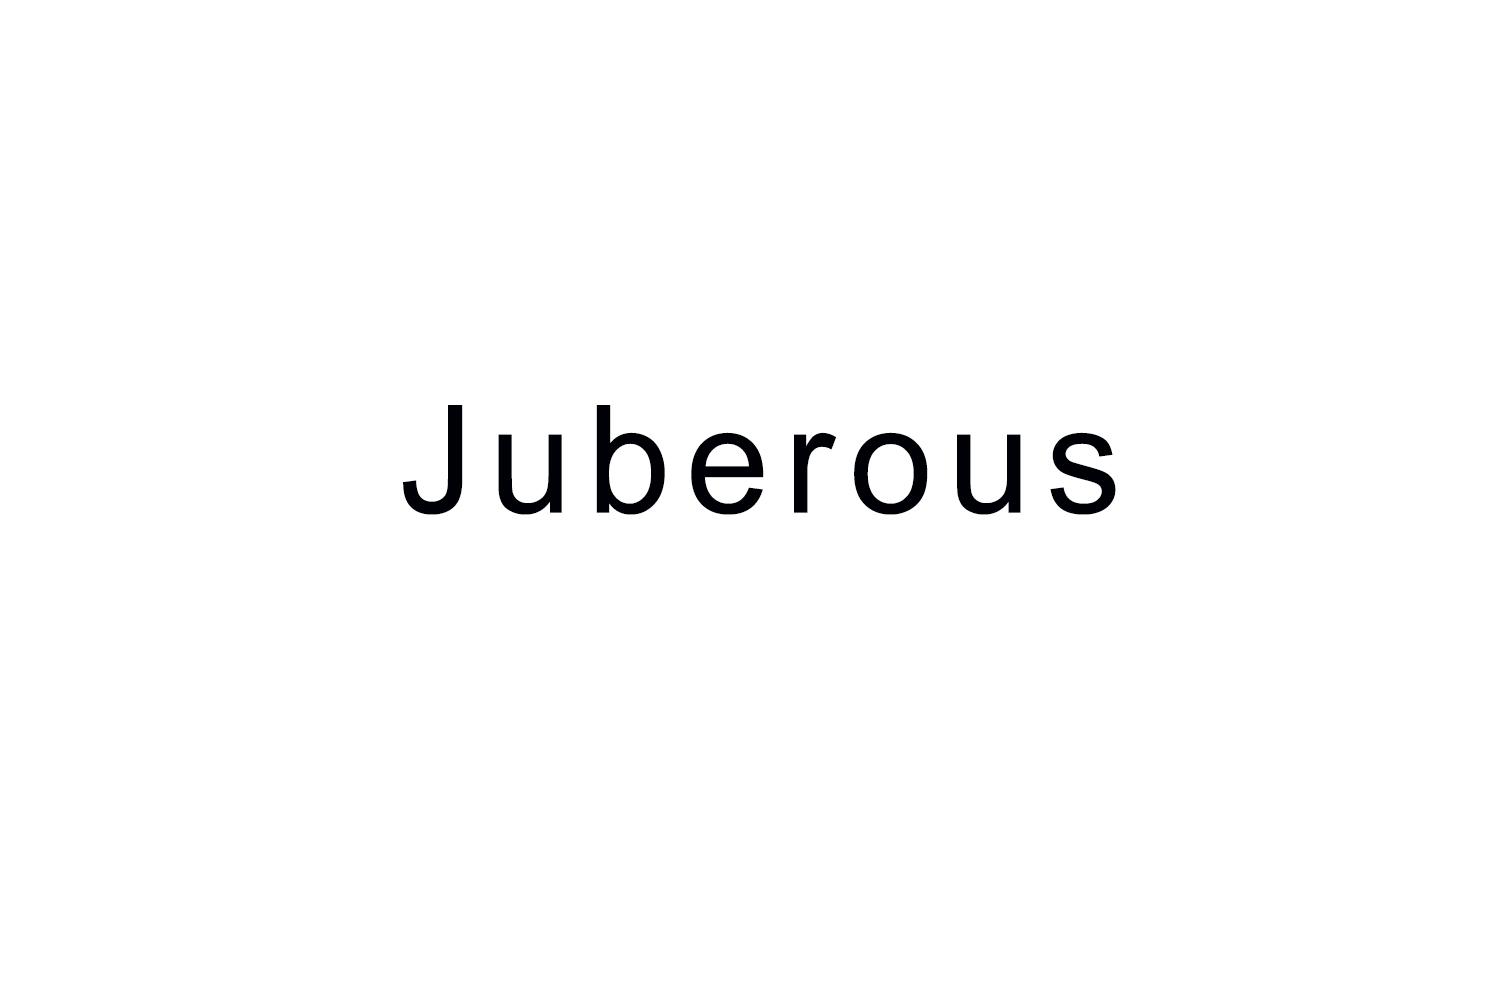 Juberous